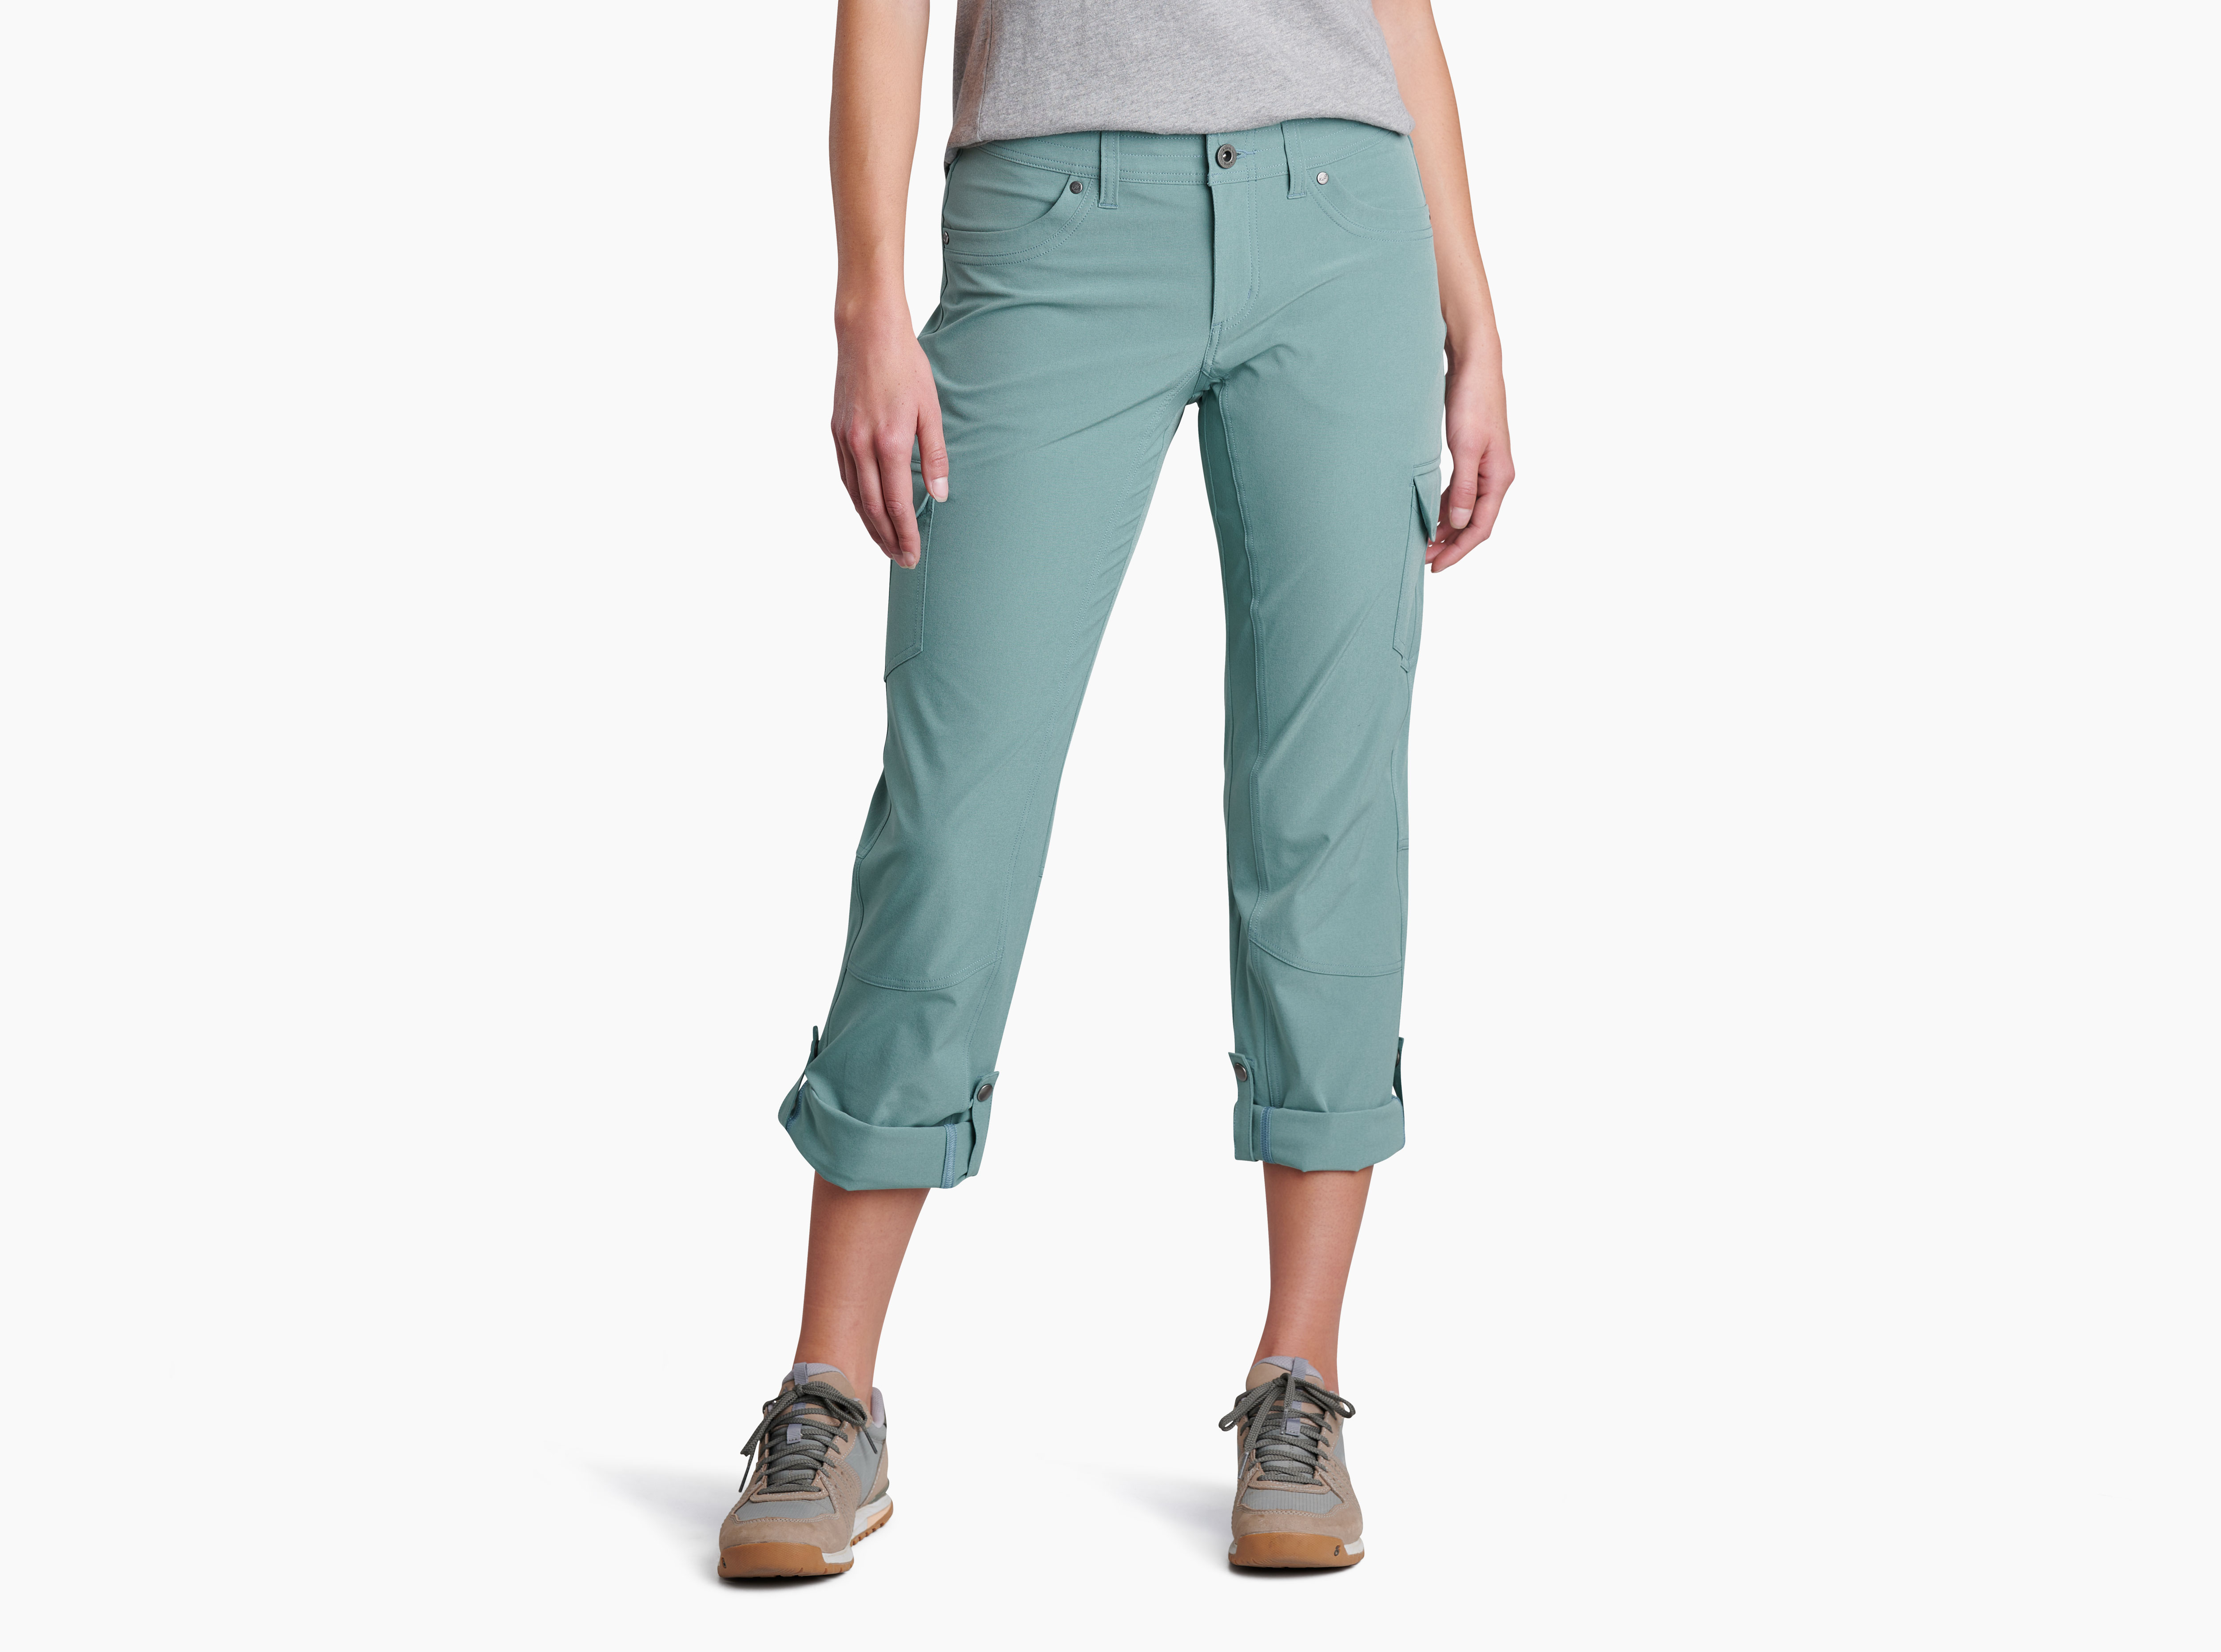 Freeflex™ Roll-Up Pant in Women's Pants, KÜHL Clothing